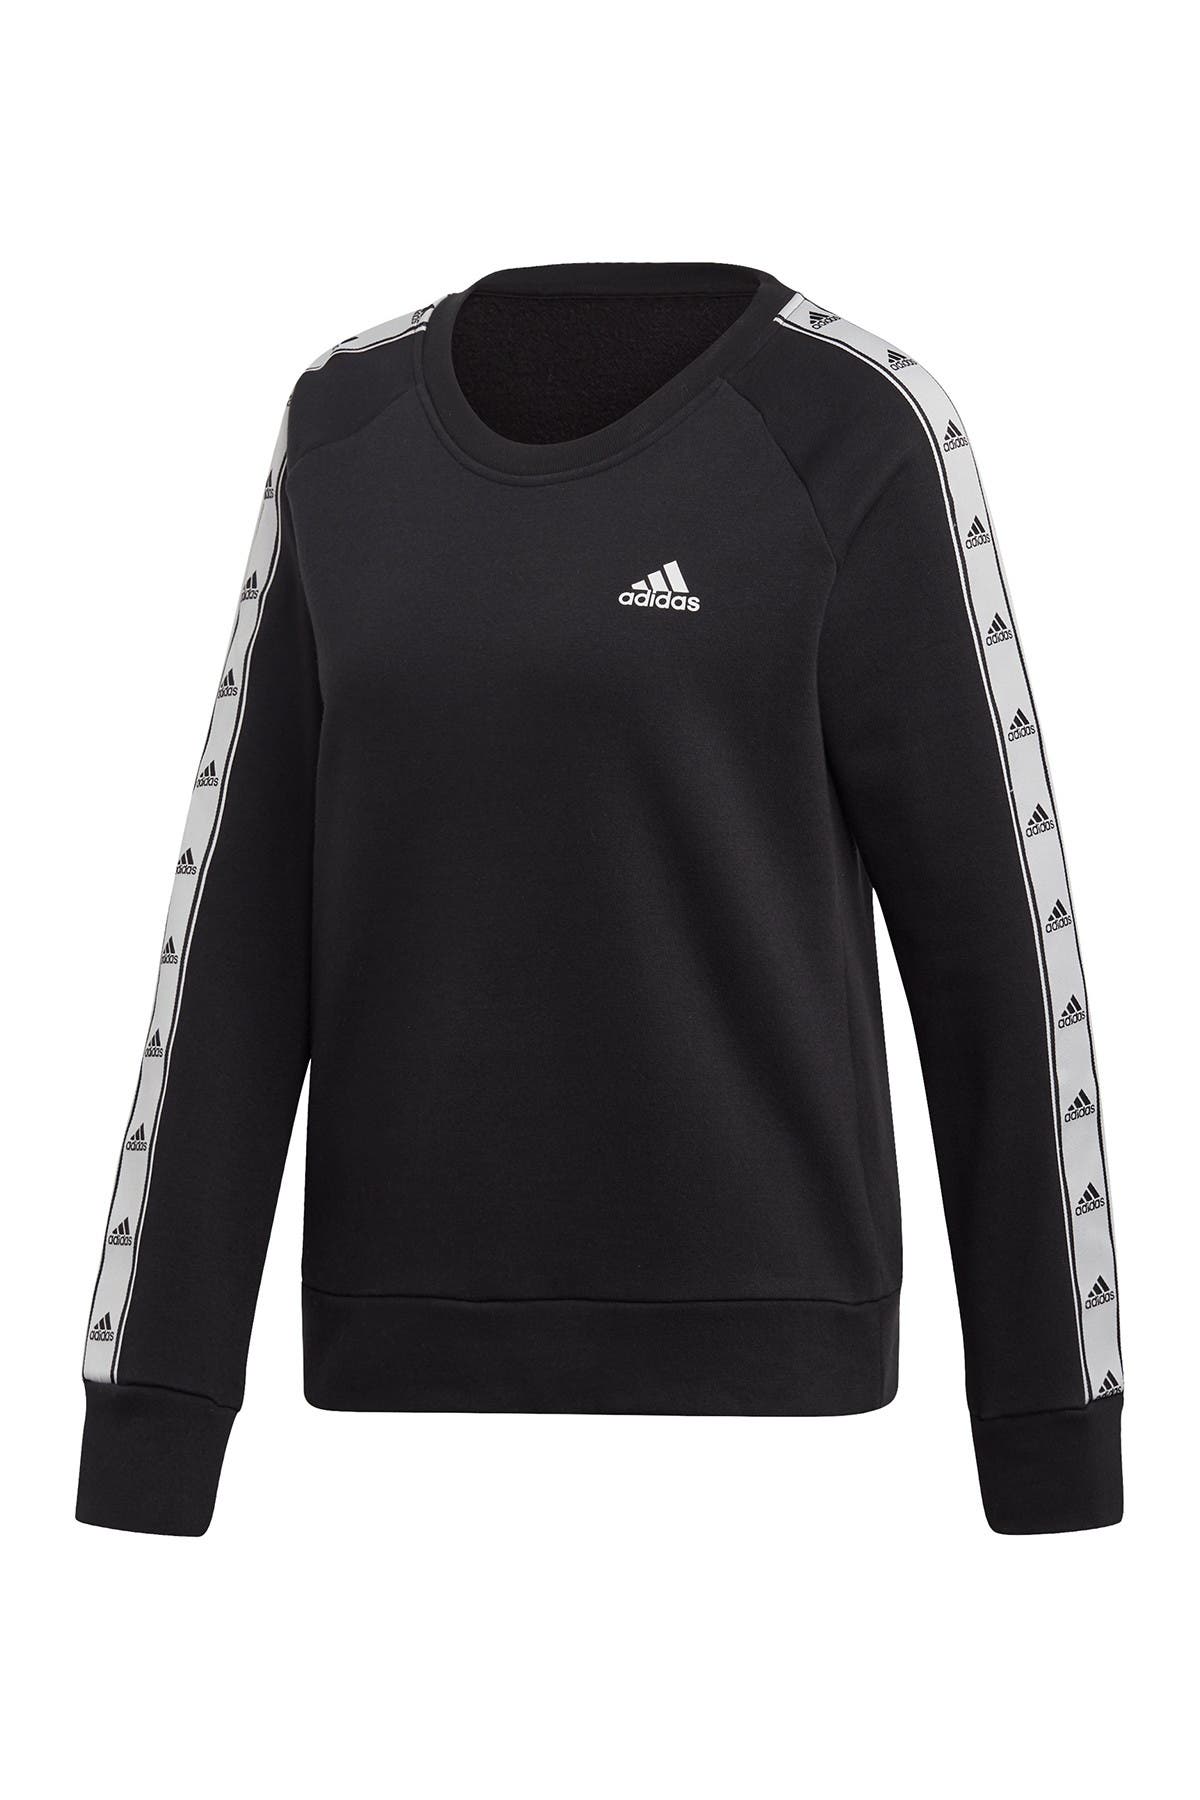 adidas | Tiro Fleece Soccer Sweatshirt 